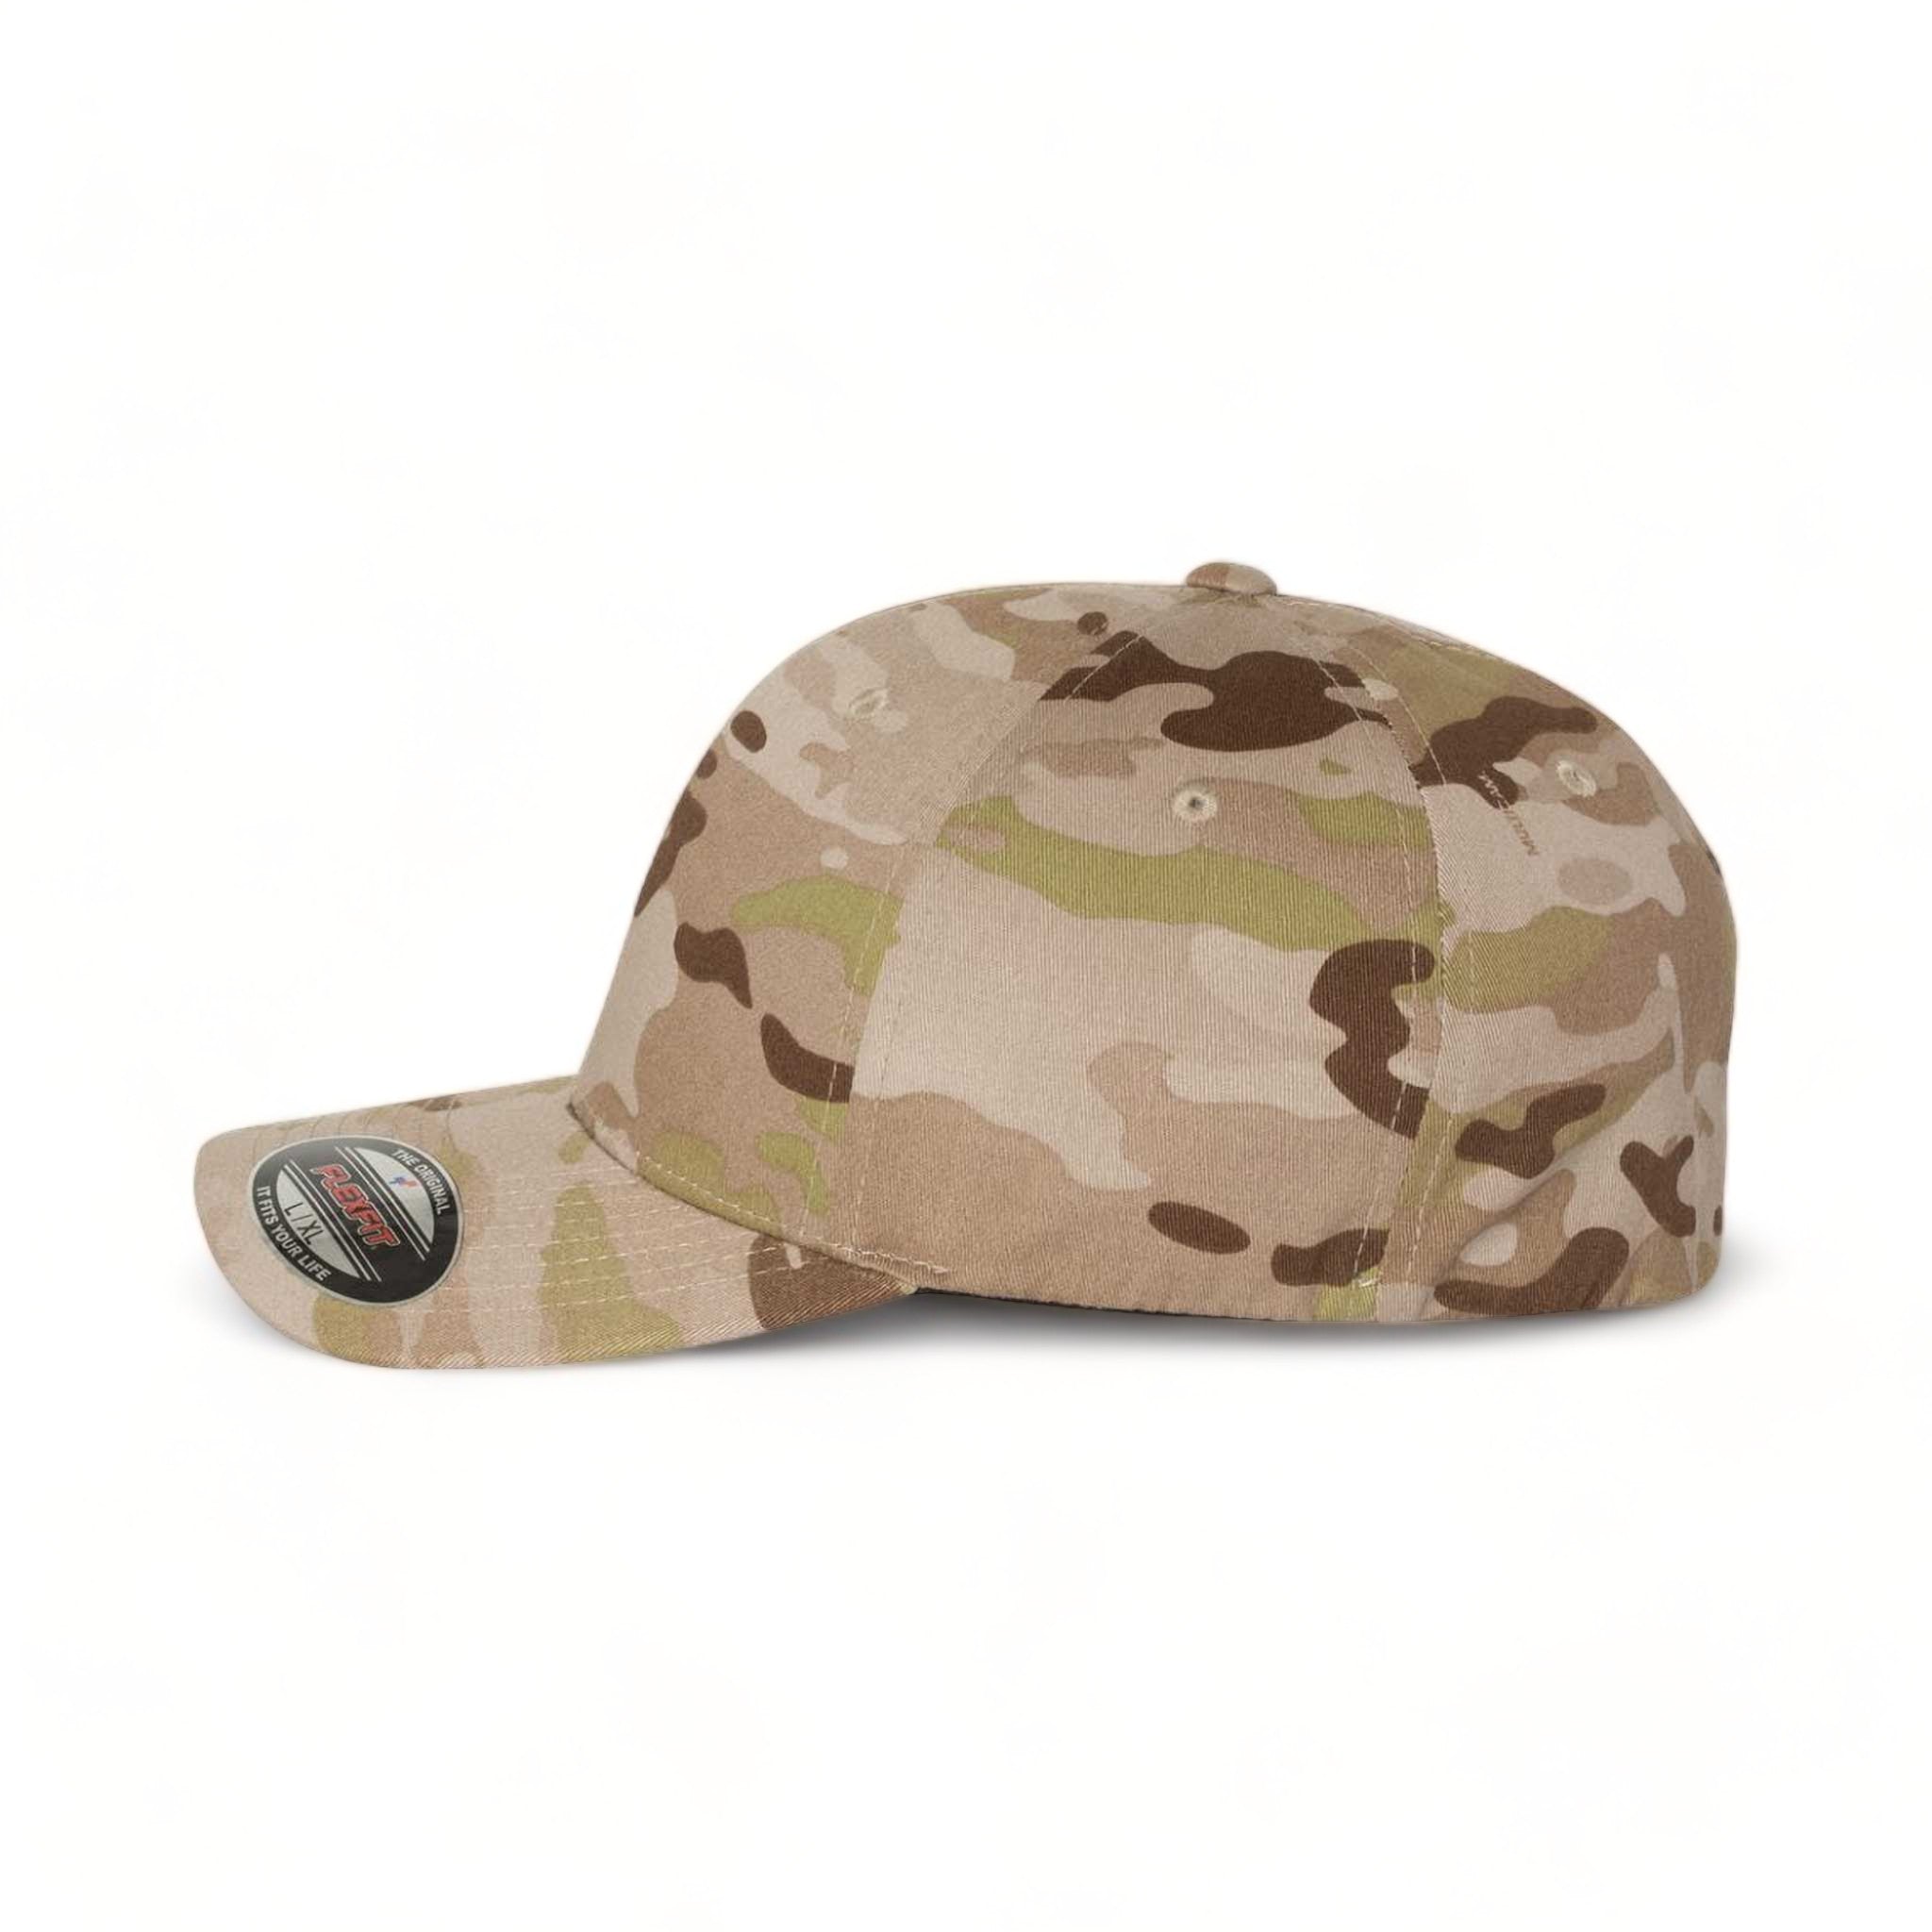 Side view of Flexfit 6277 custom hat in multicam arid